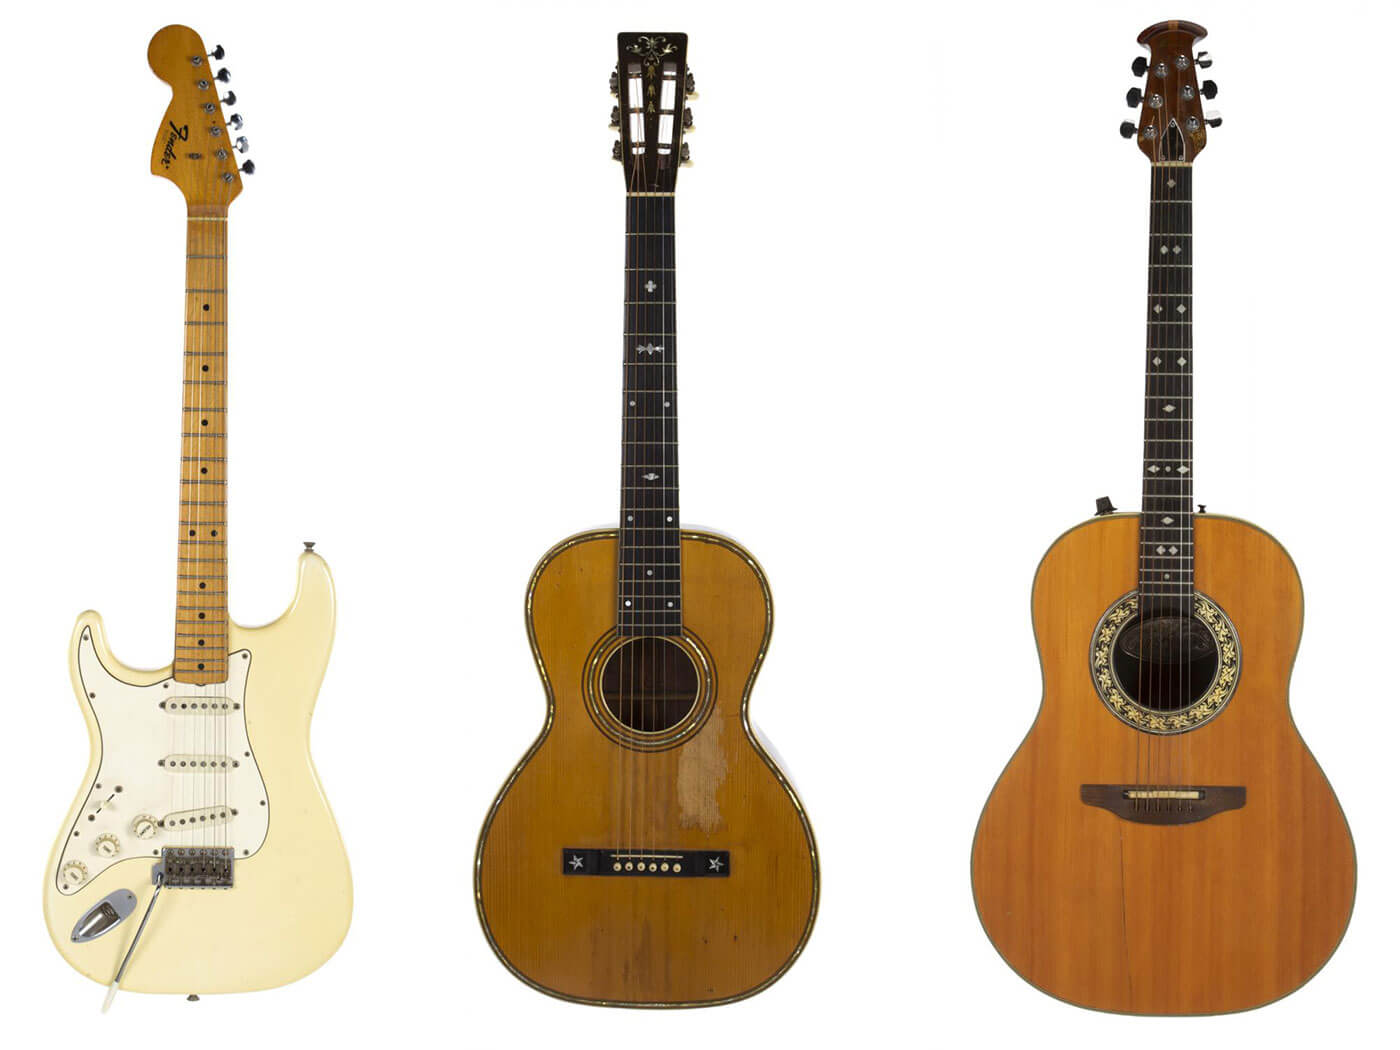 Three notable guitars